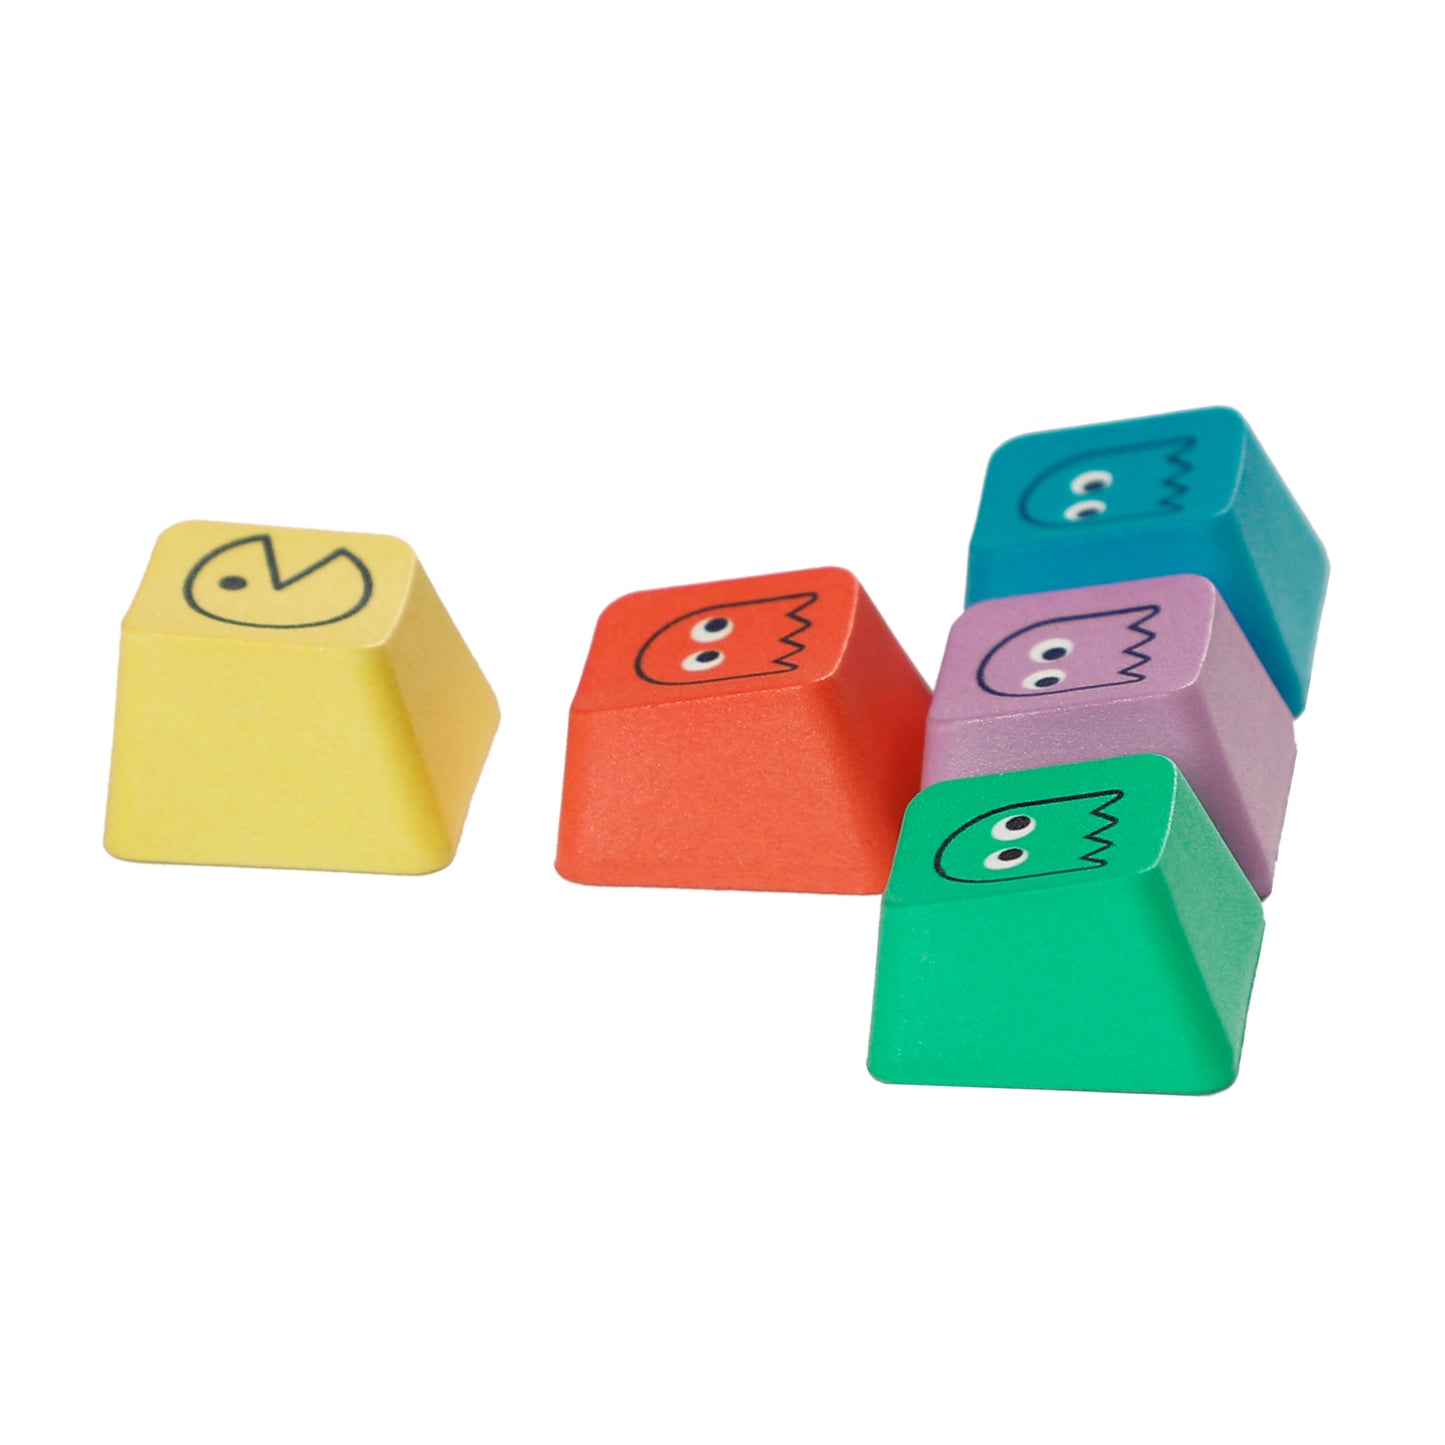 Pacman Theme or Mario Theme OEM Profile keycaps(Five Dye PBT Custom Sublimation )